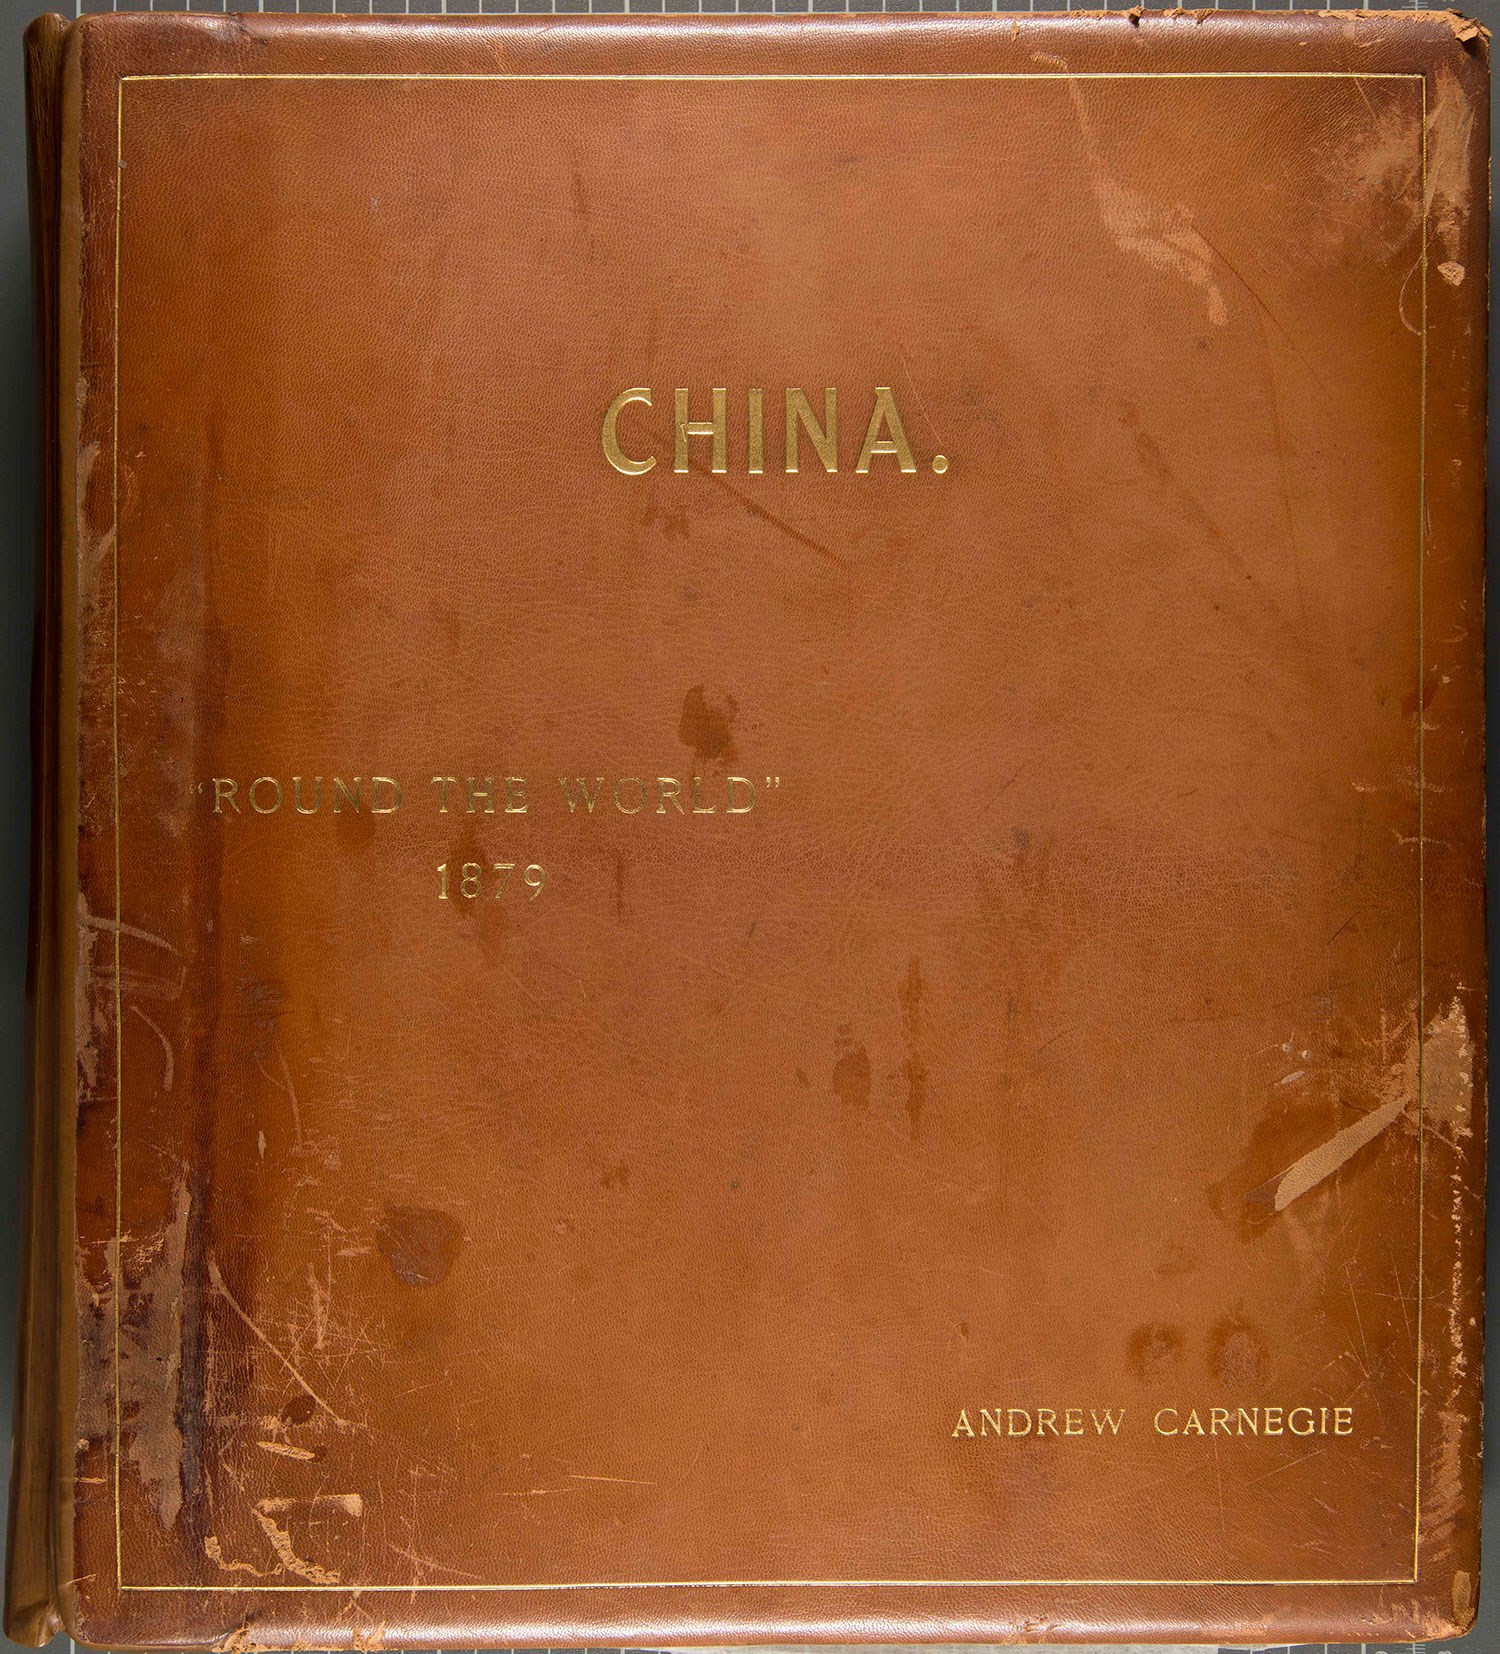 Carnegie-China-album-cover.jpg